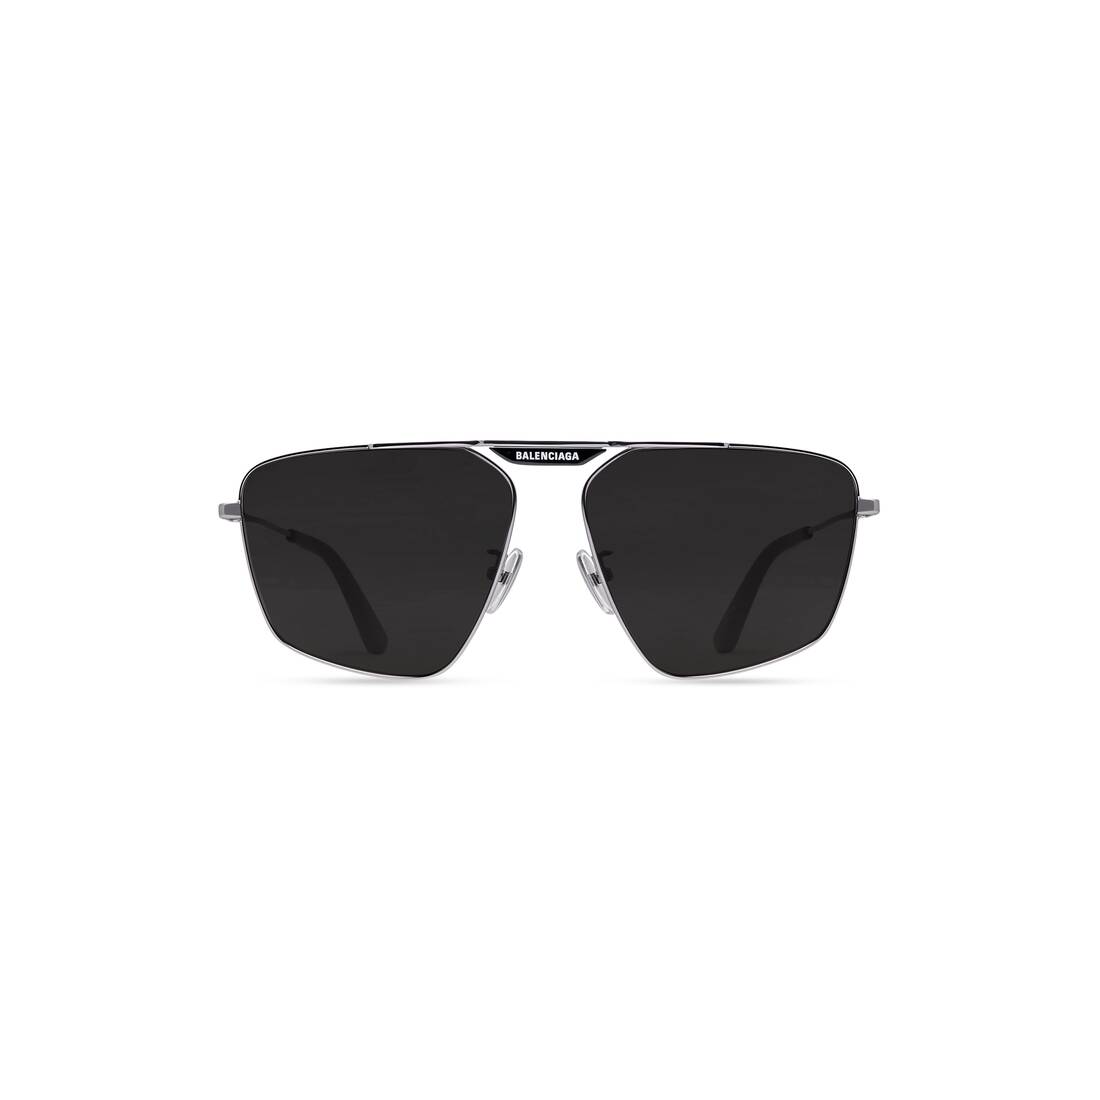 Balenciaga Black Oversized Flat Top Sunglasses Balenciaga